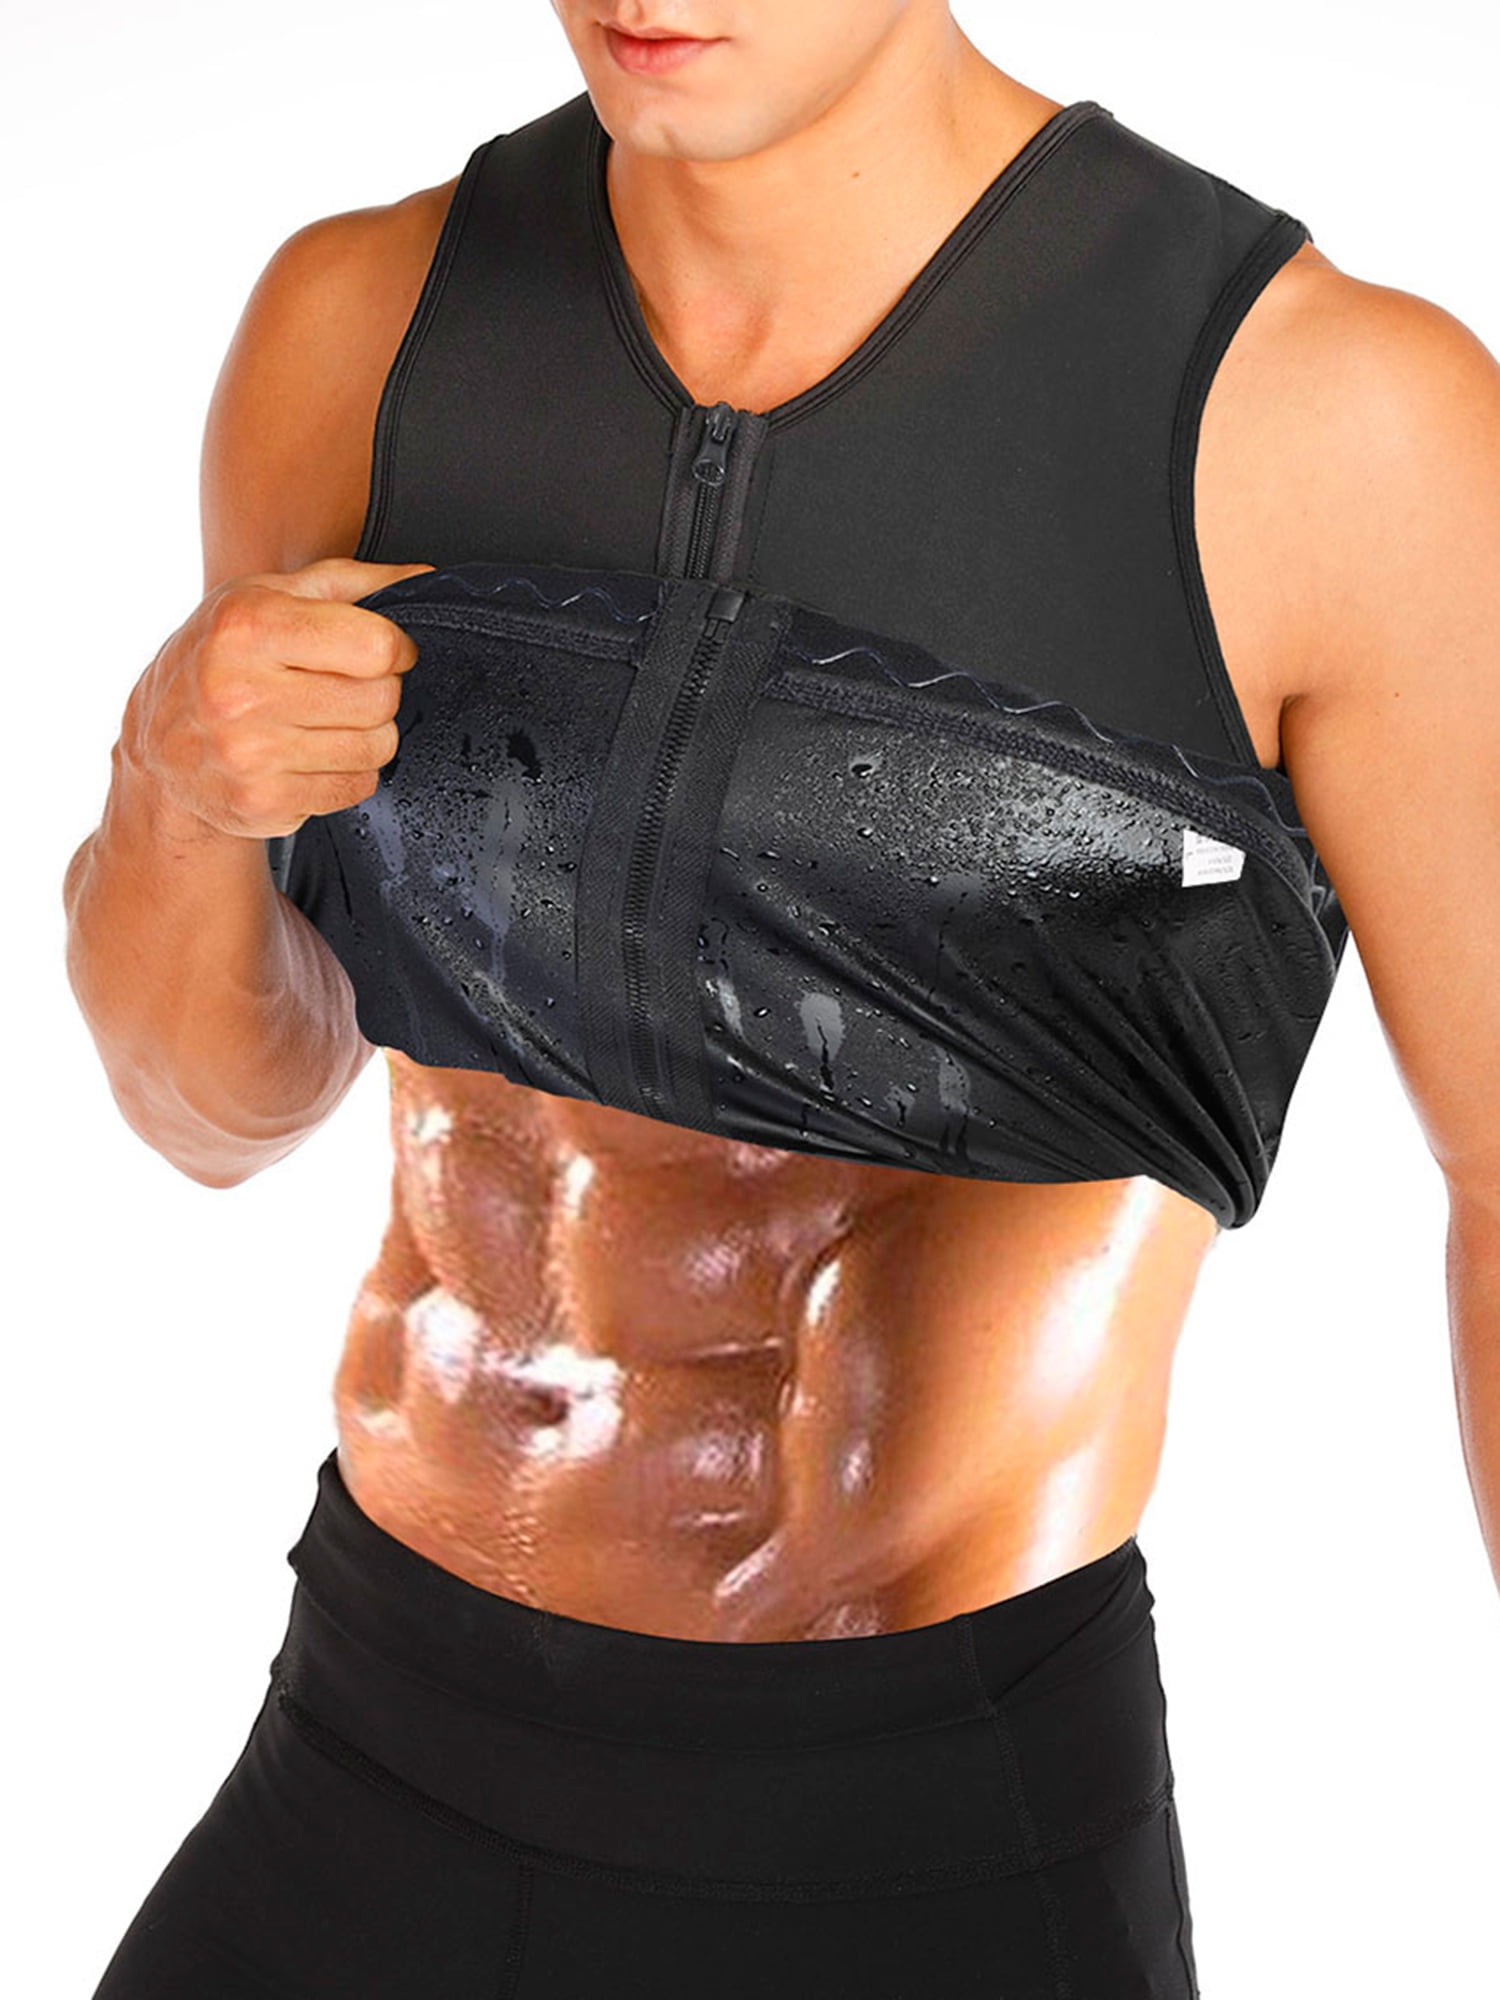 2fit™ Neoprene Sweat Sauna Suit Weight Loss Slim Shorts MMA Gym Boxing MMA 